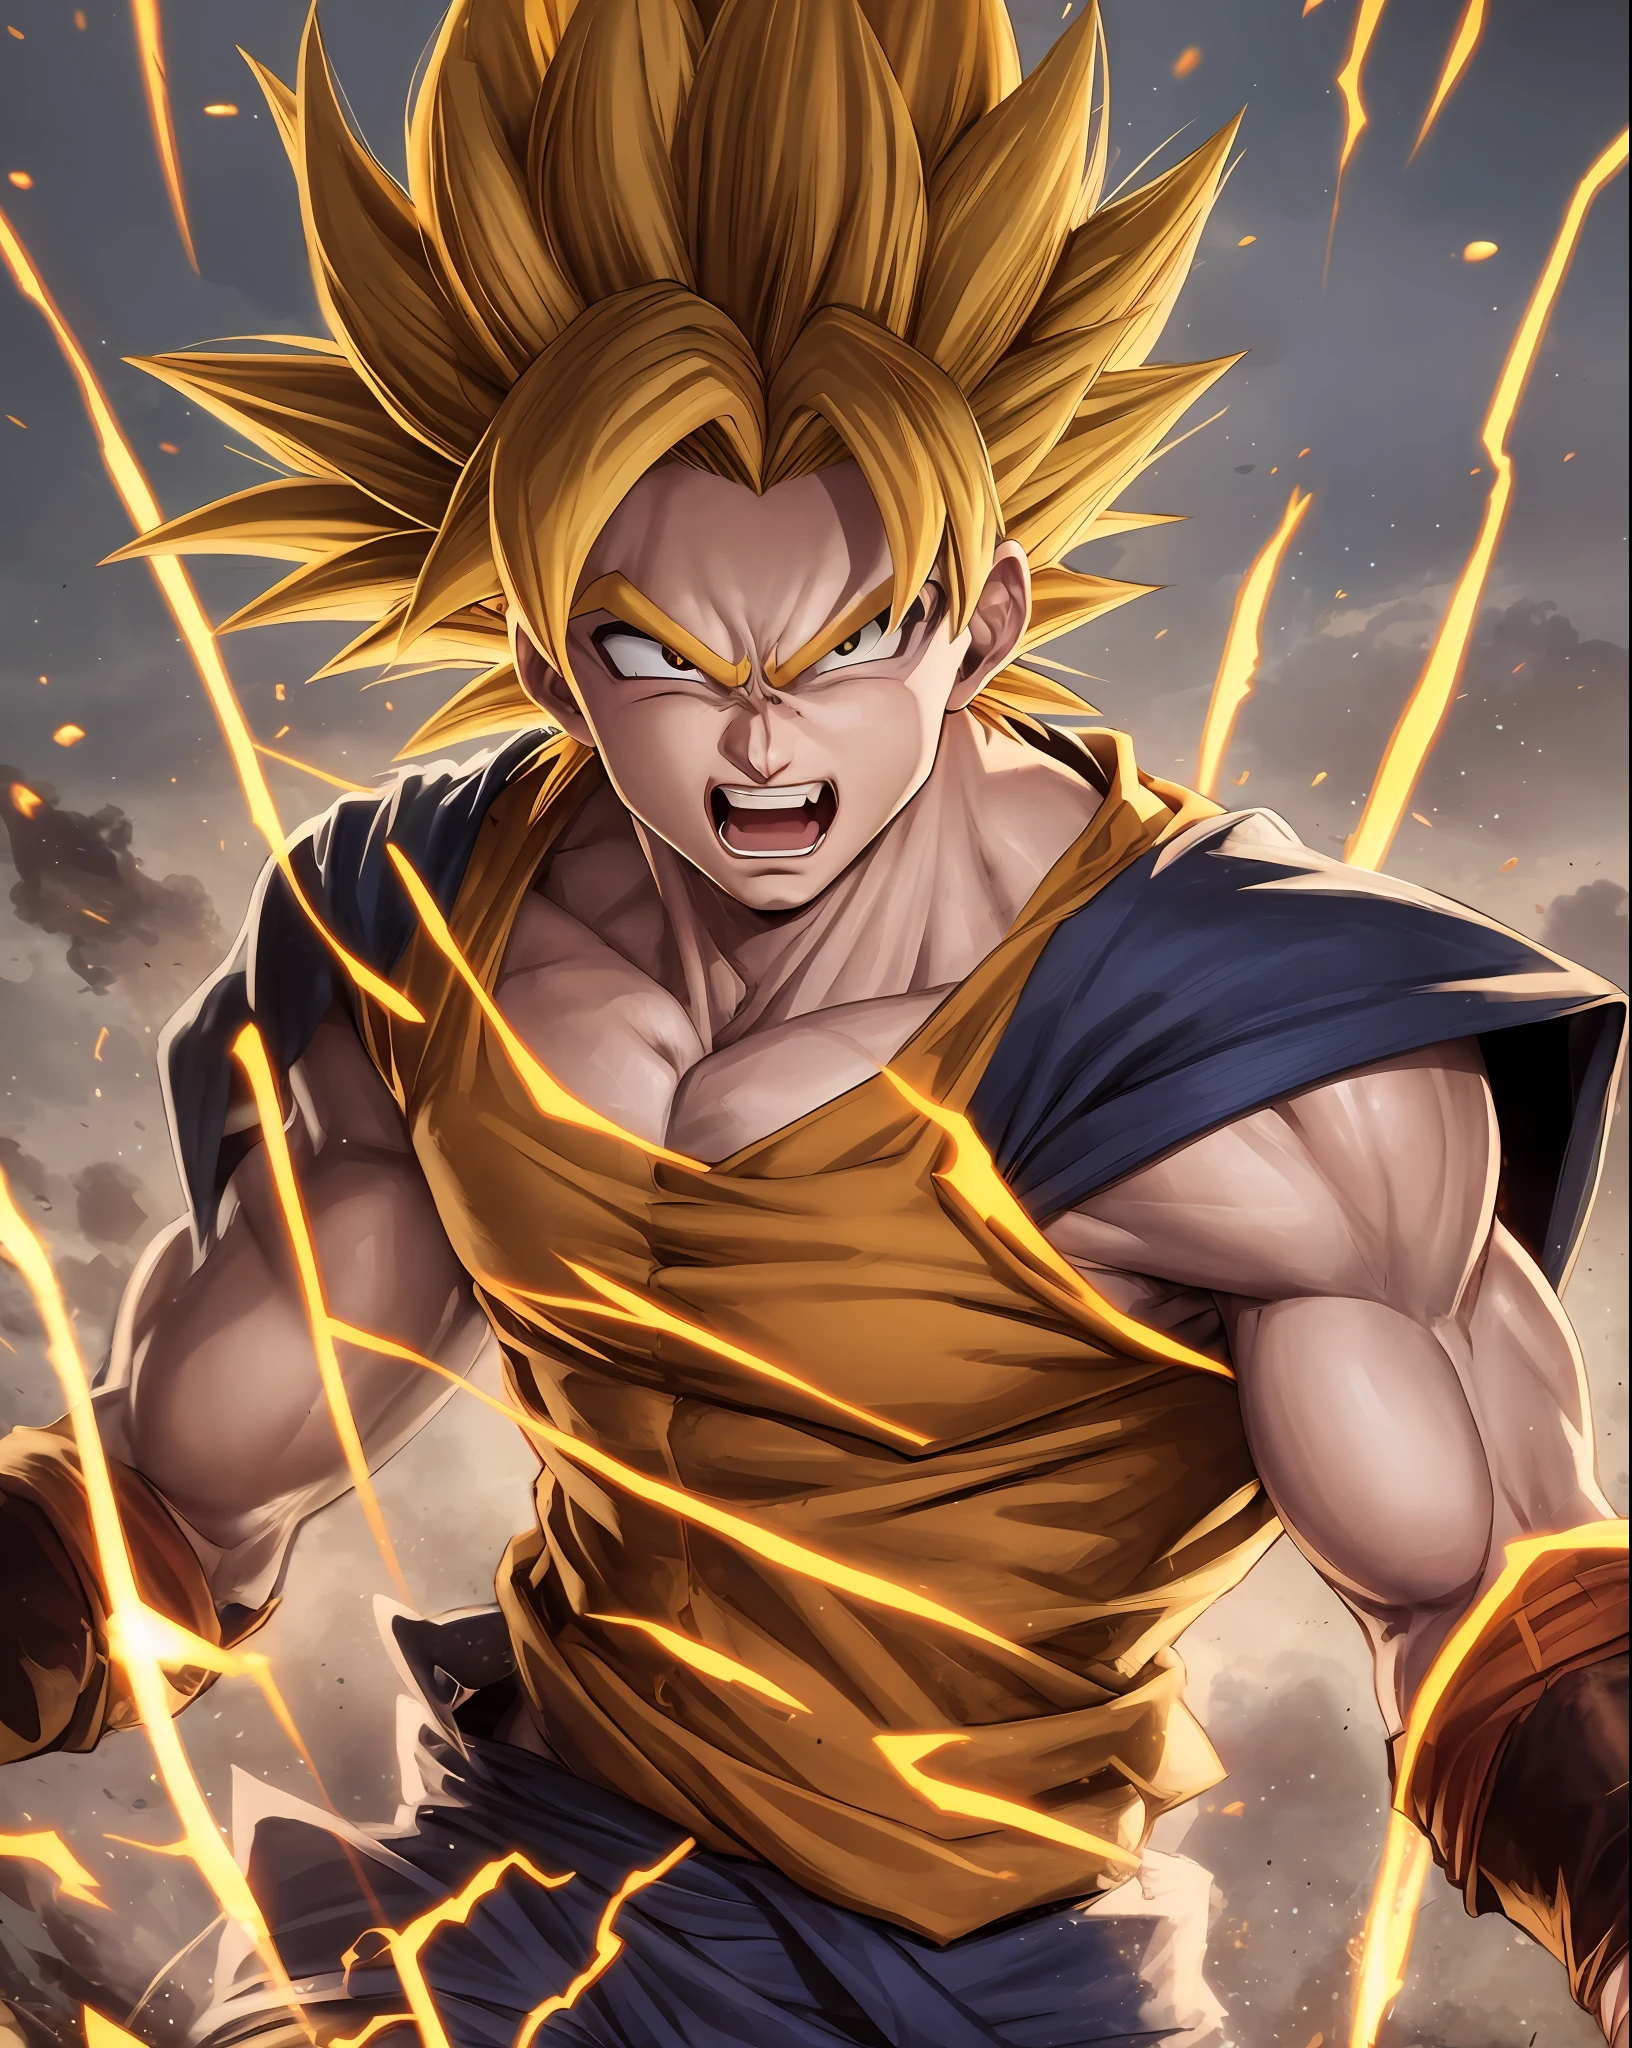 Goku super Sayajin 4, red coat, rabo, energy leaving the body, hair flying with energy rays, fire hair, Amazing image, mythological style